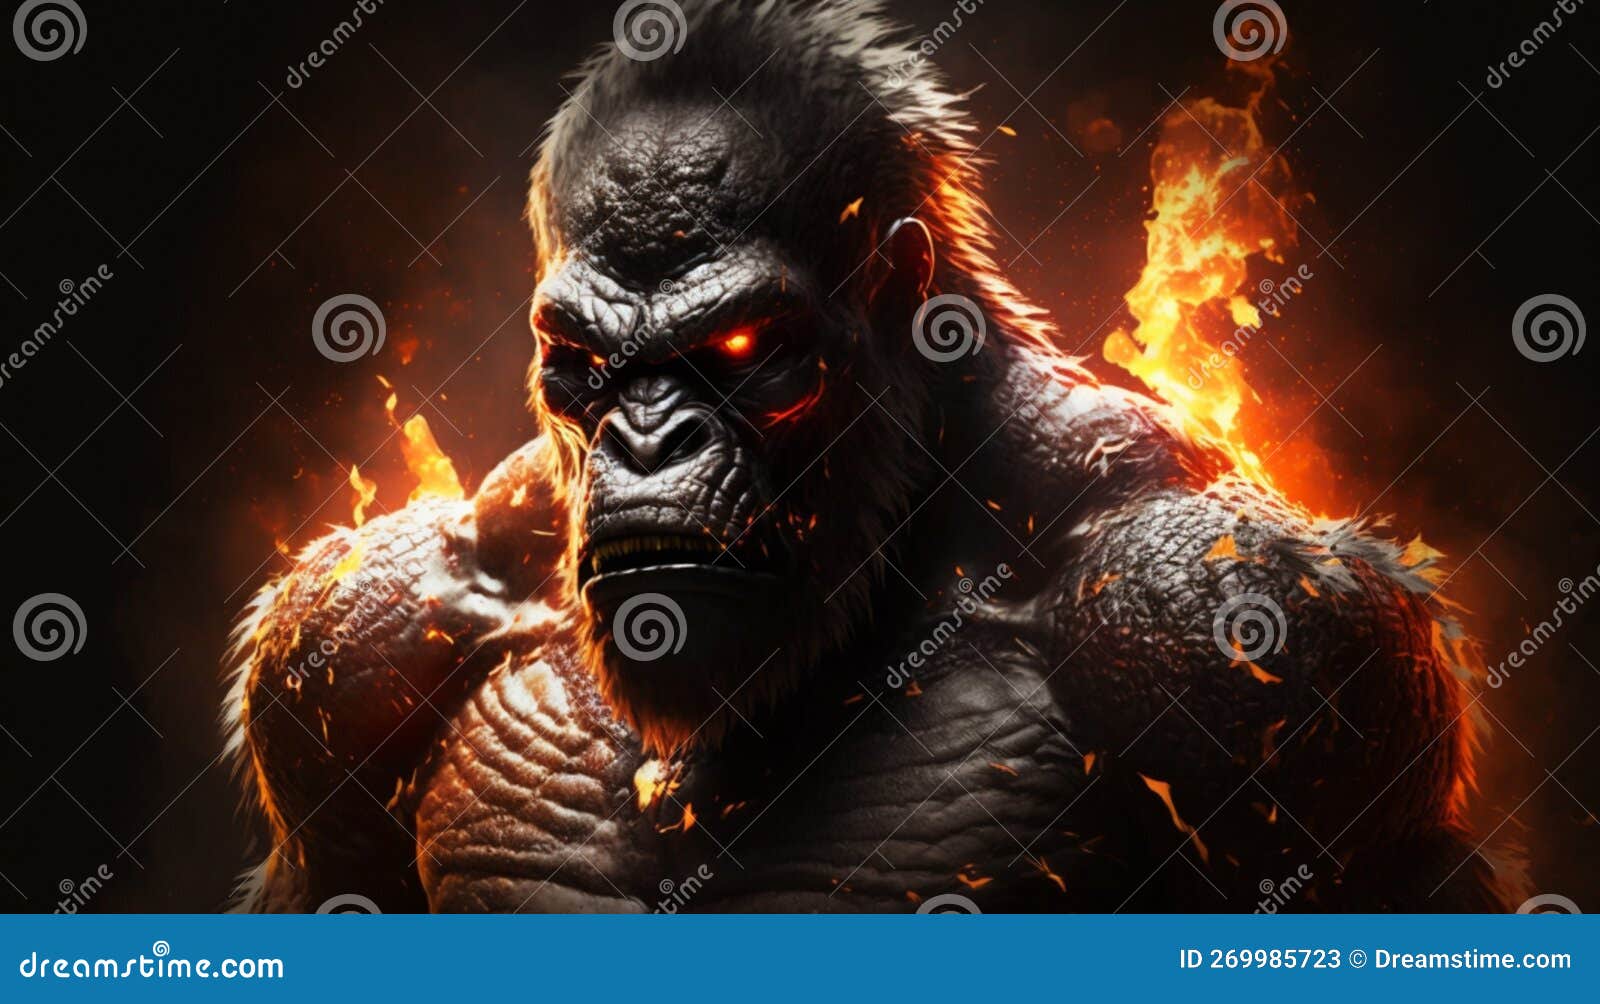 Angry Fire Gorilla Illustration Stock Illustration - Illustration of ...